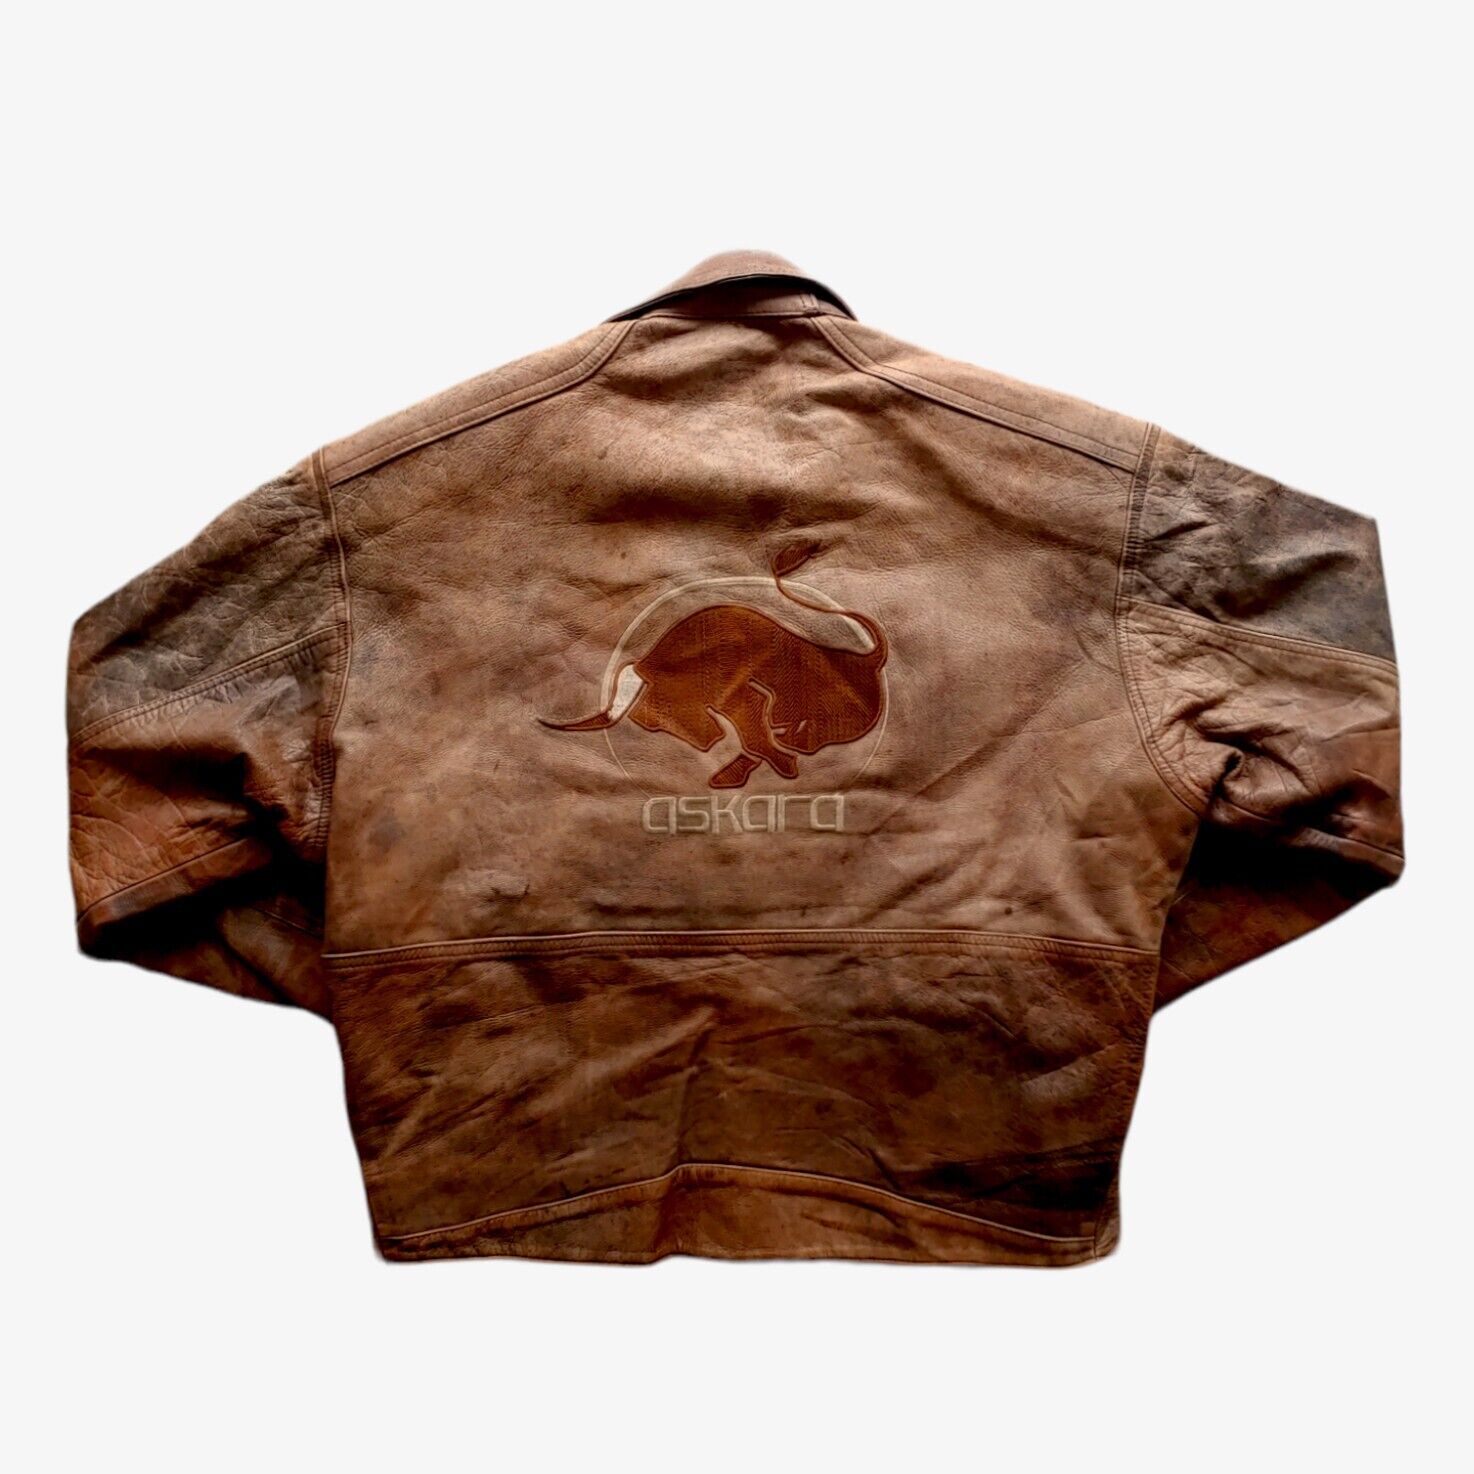 Vintage 1990s Askara Paris Leather Biker Jacket With Big Back Embroidered Bull - Casspios Dream